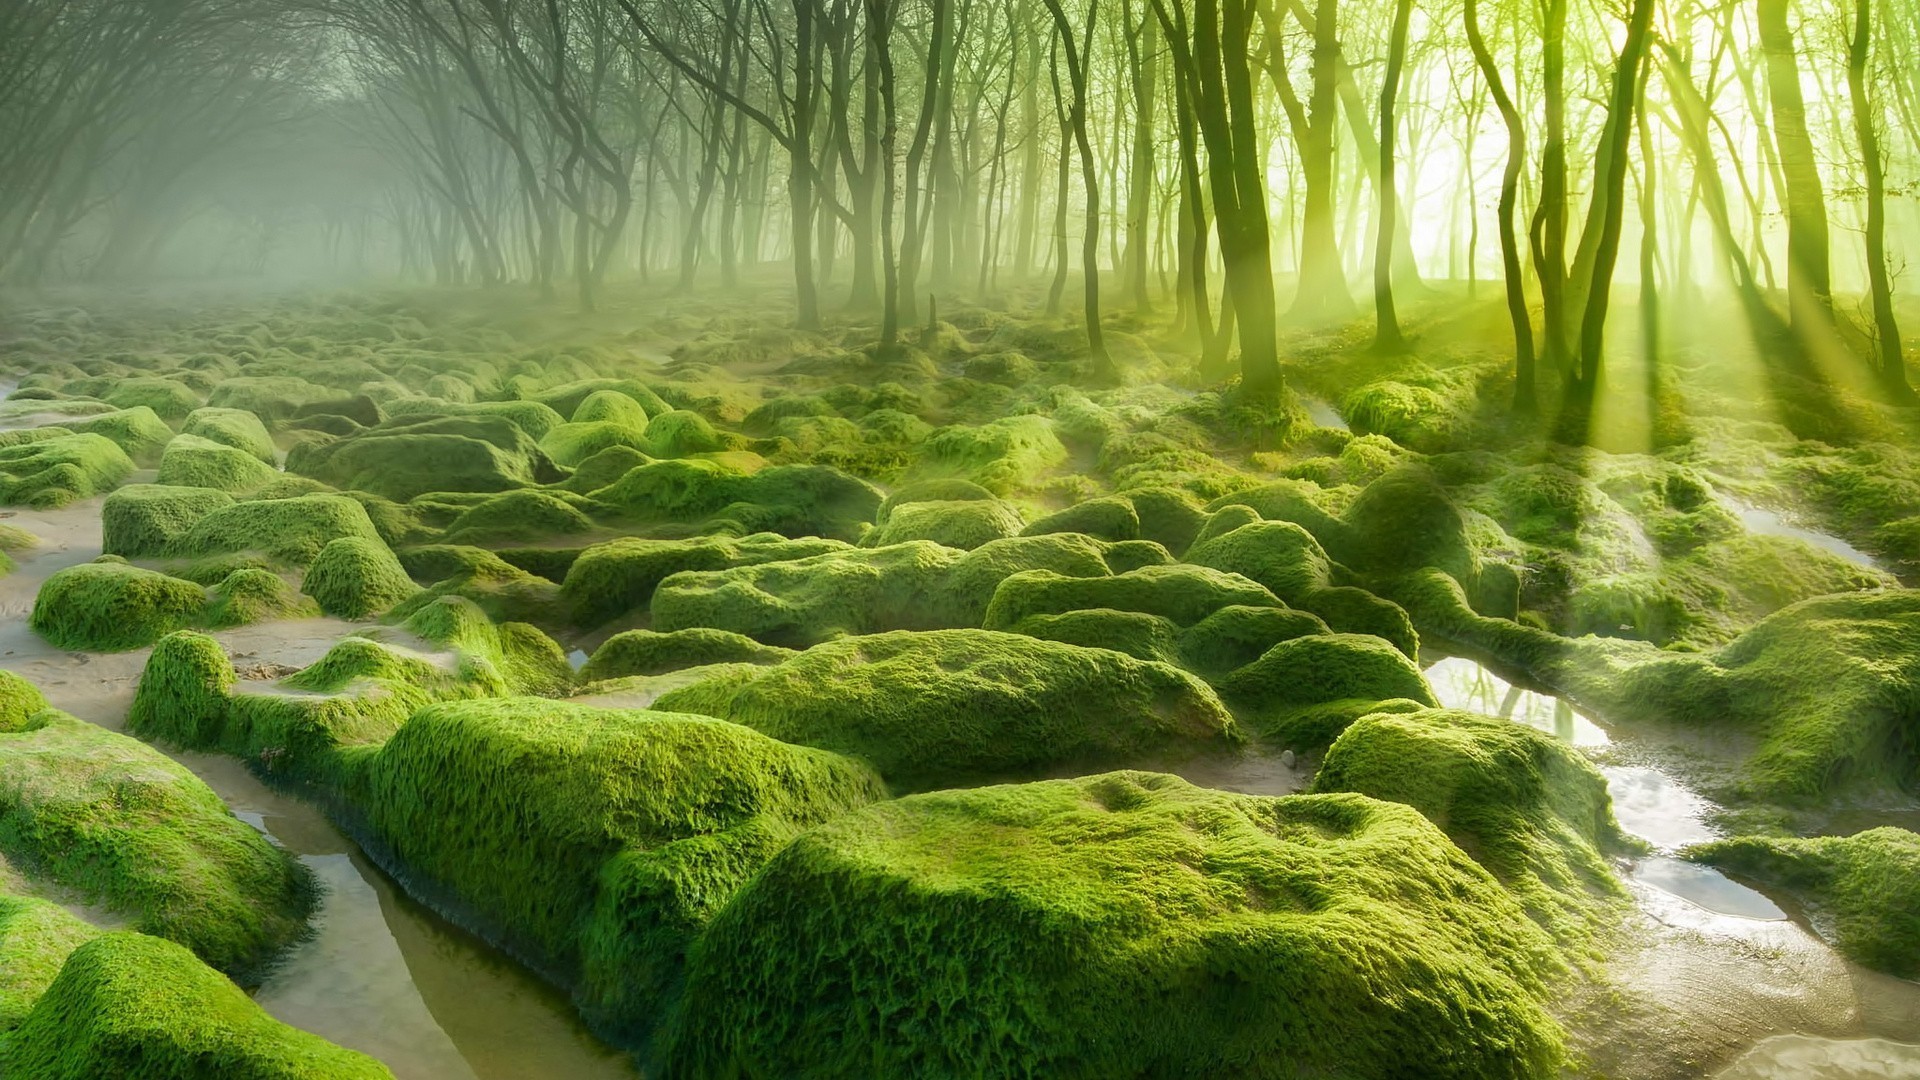 moss wallpaper,natural landscape,nature,green,vegetation,natural environment